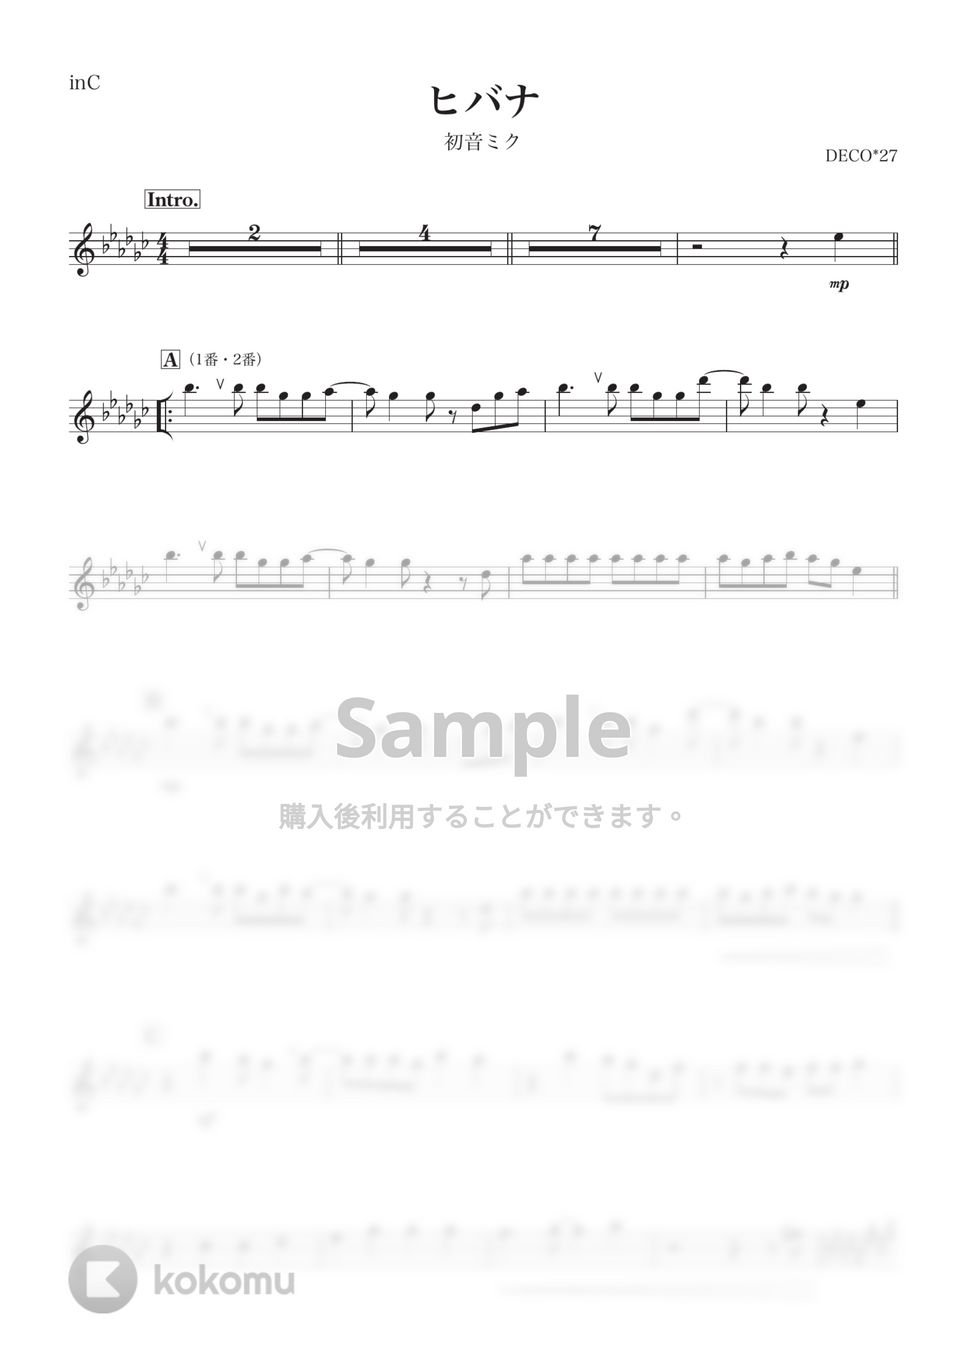 DECO*27 - ヒバナ (C) by kanamusic